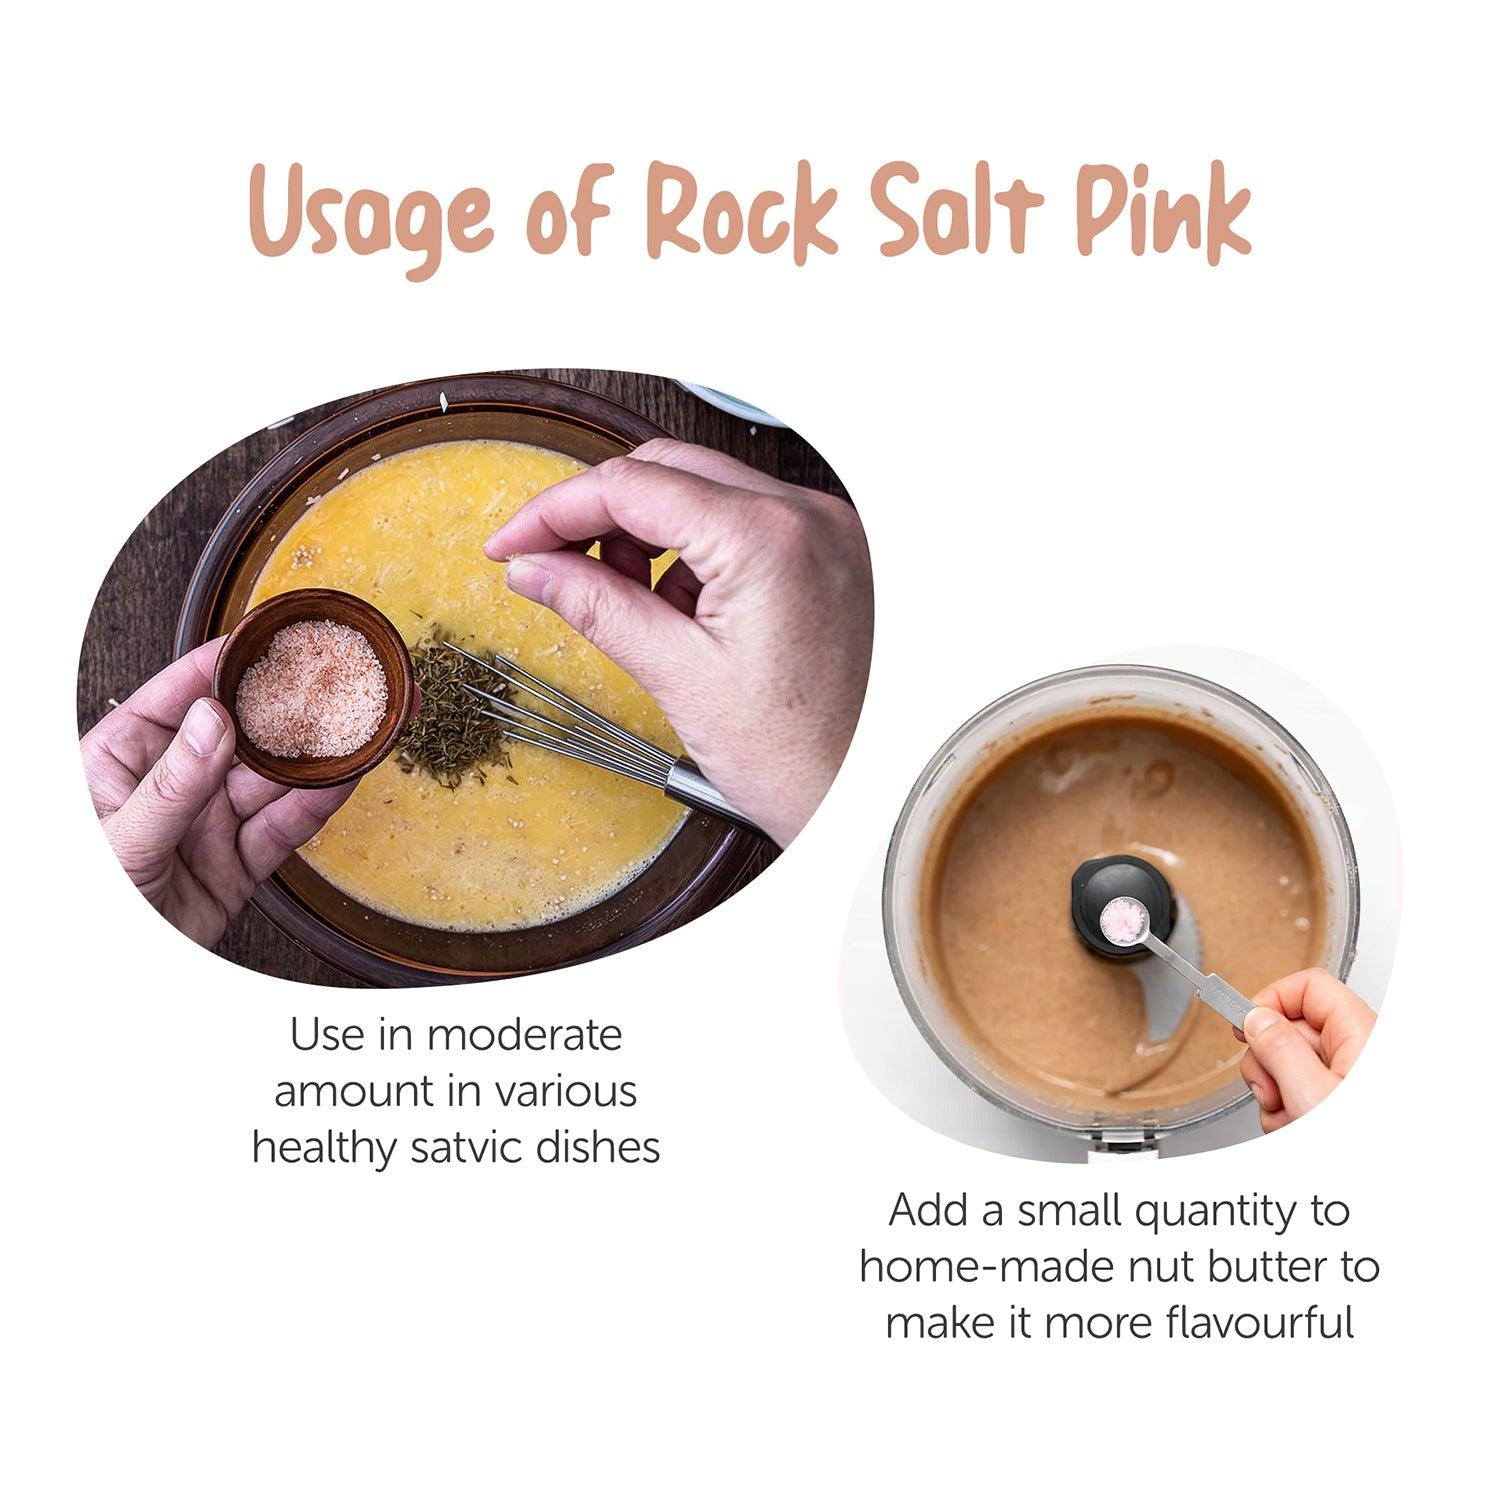 Pink Rock Salt 2.4Kg - 100% Natural & Pure Himalayan Gulabi Sendha Namak - Unadulterated - Satopradhan